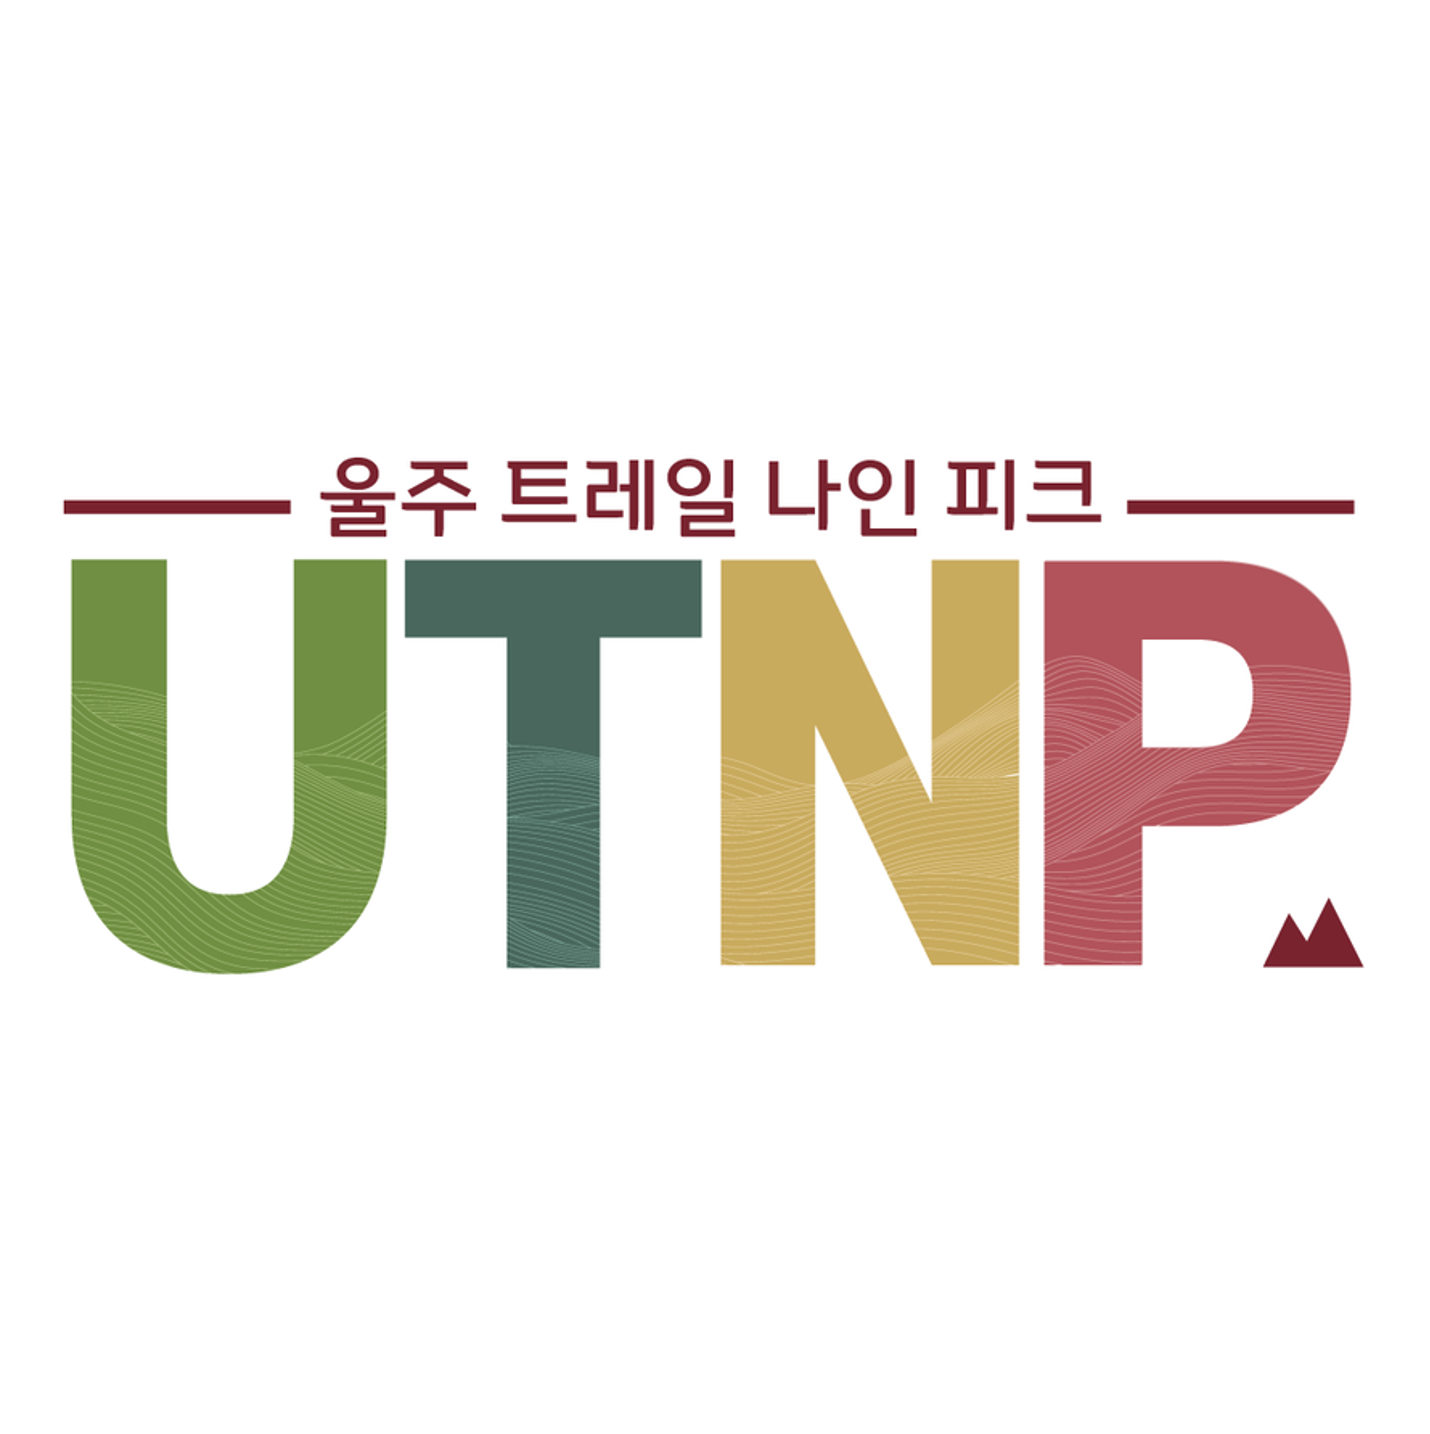 Logo-Ultra-Trail-Nine-Peaks